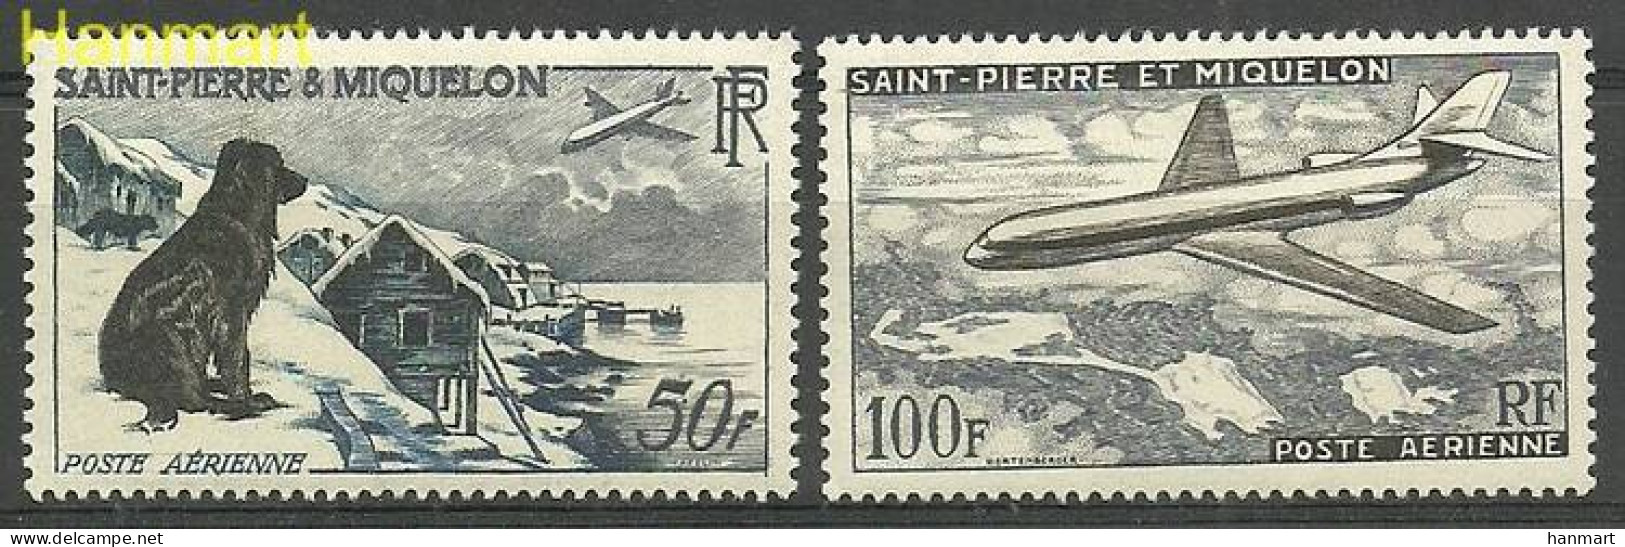 Saint Pierre And Miquelon 1957 Mi 386-387 MNH  (ZS1 SPM386-387) - Dogs